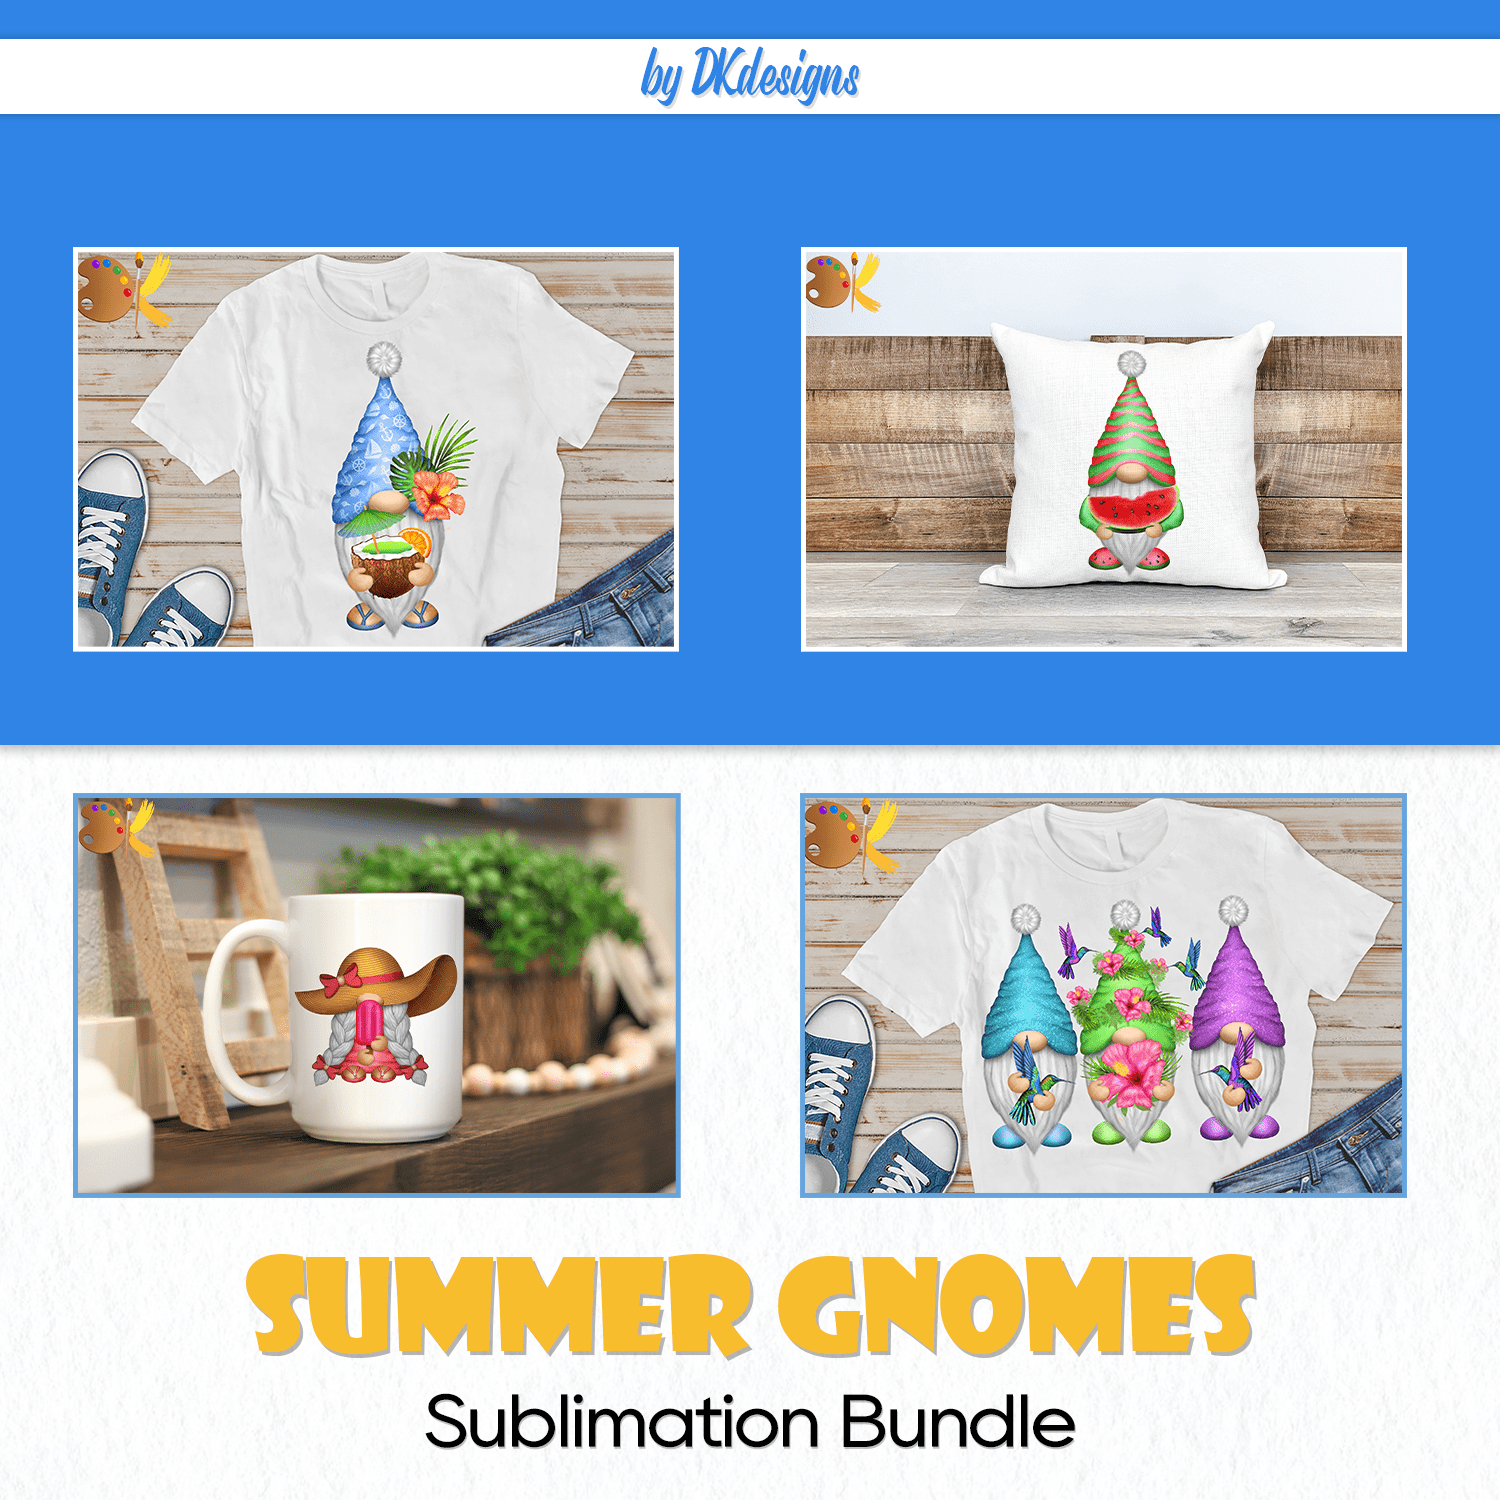 Summer Gnomes Sublimation Bundle - main image preview.